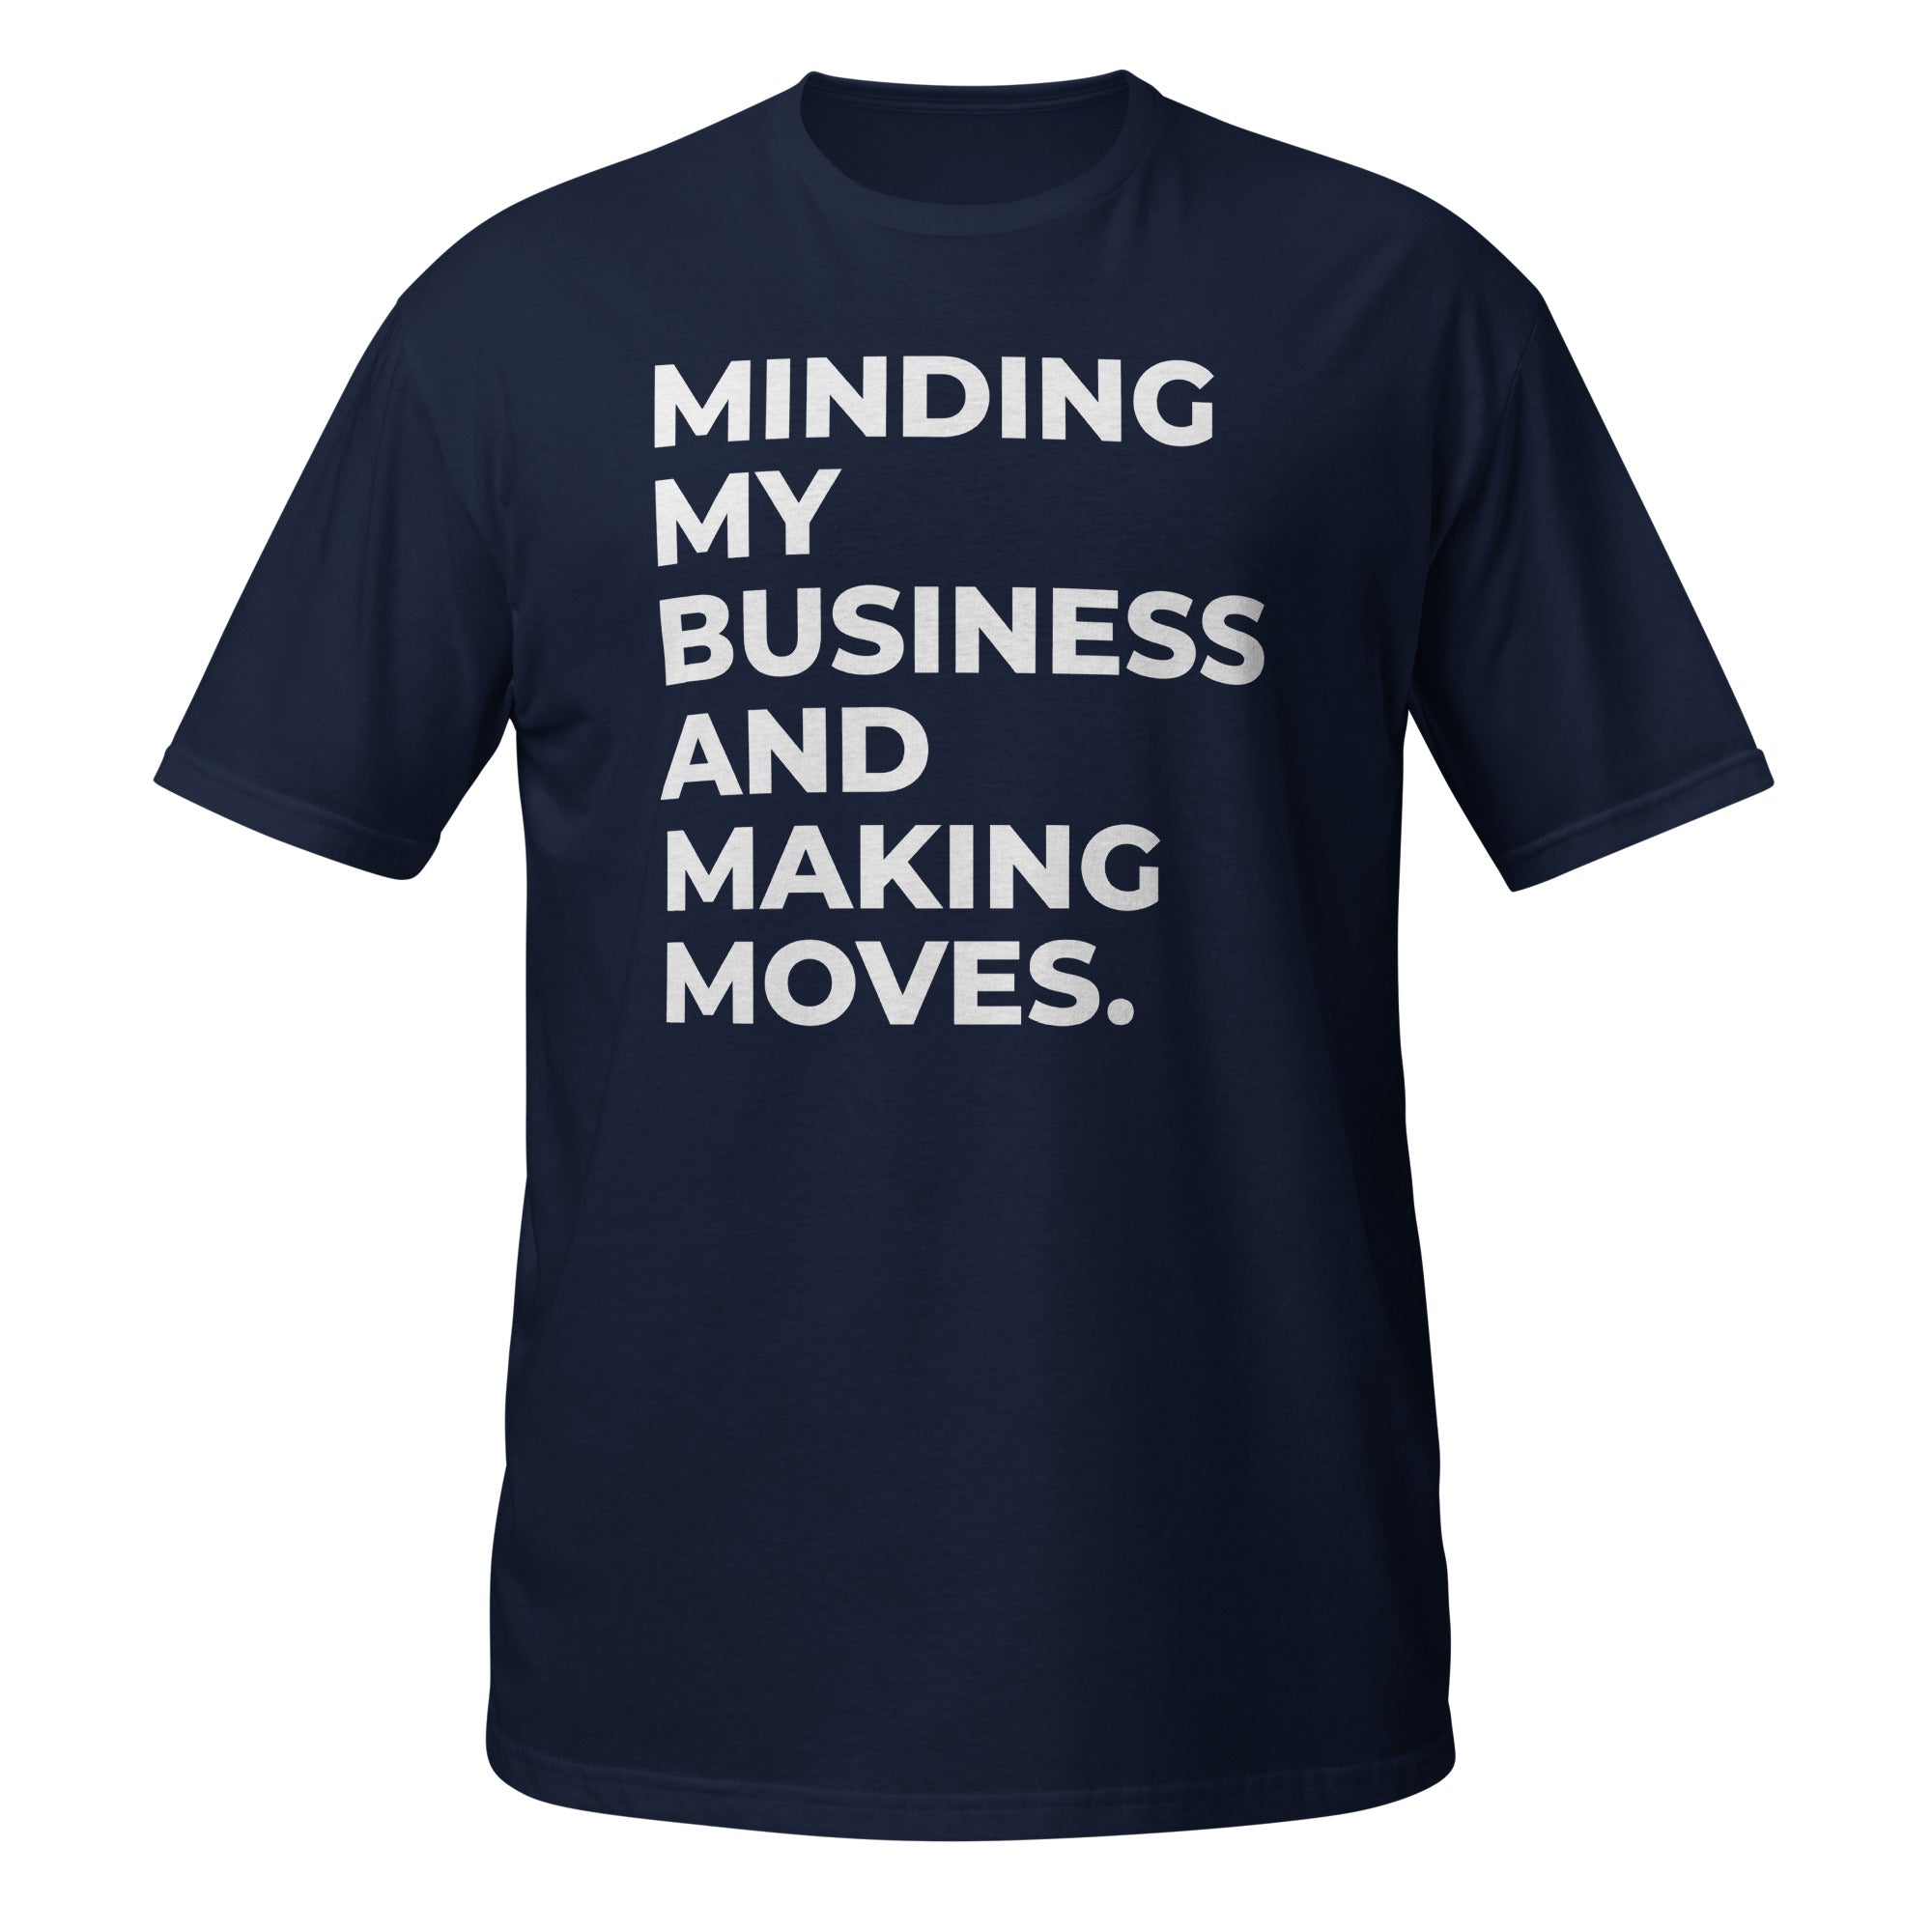 Minding My Business and Making Moves. Short-Sleeve Unisex T-Shirt - Nailah Renae